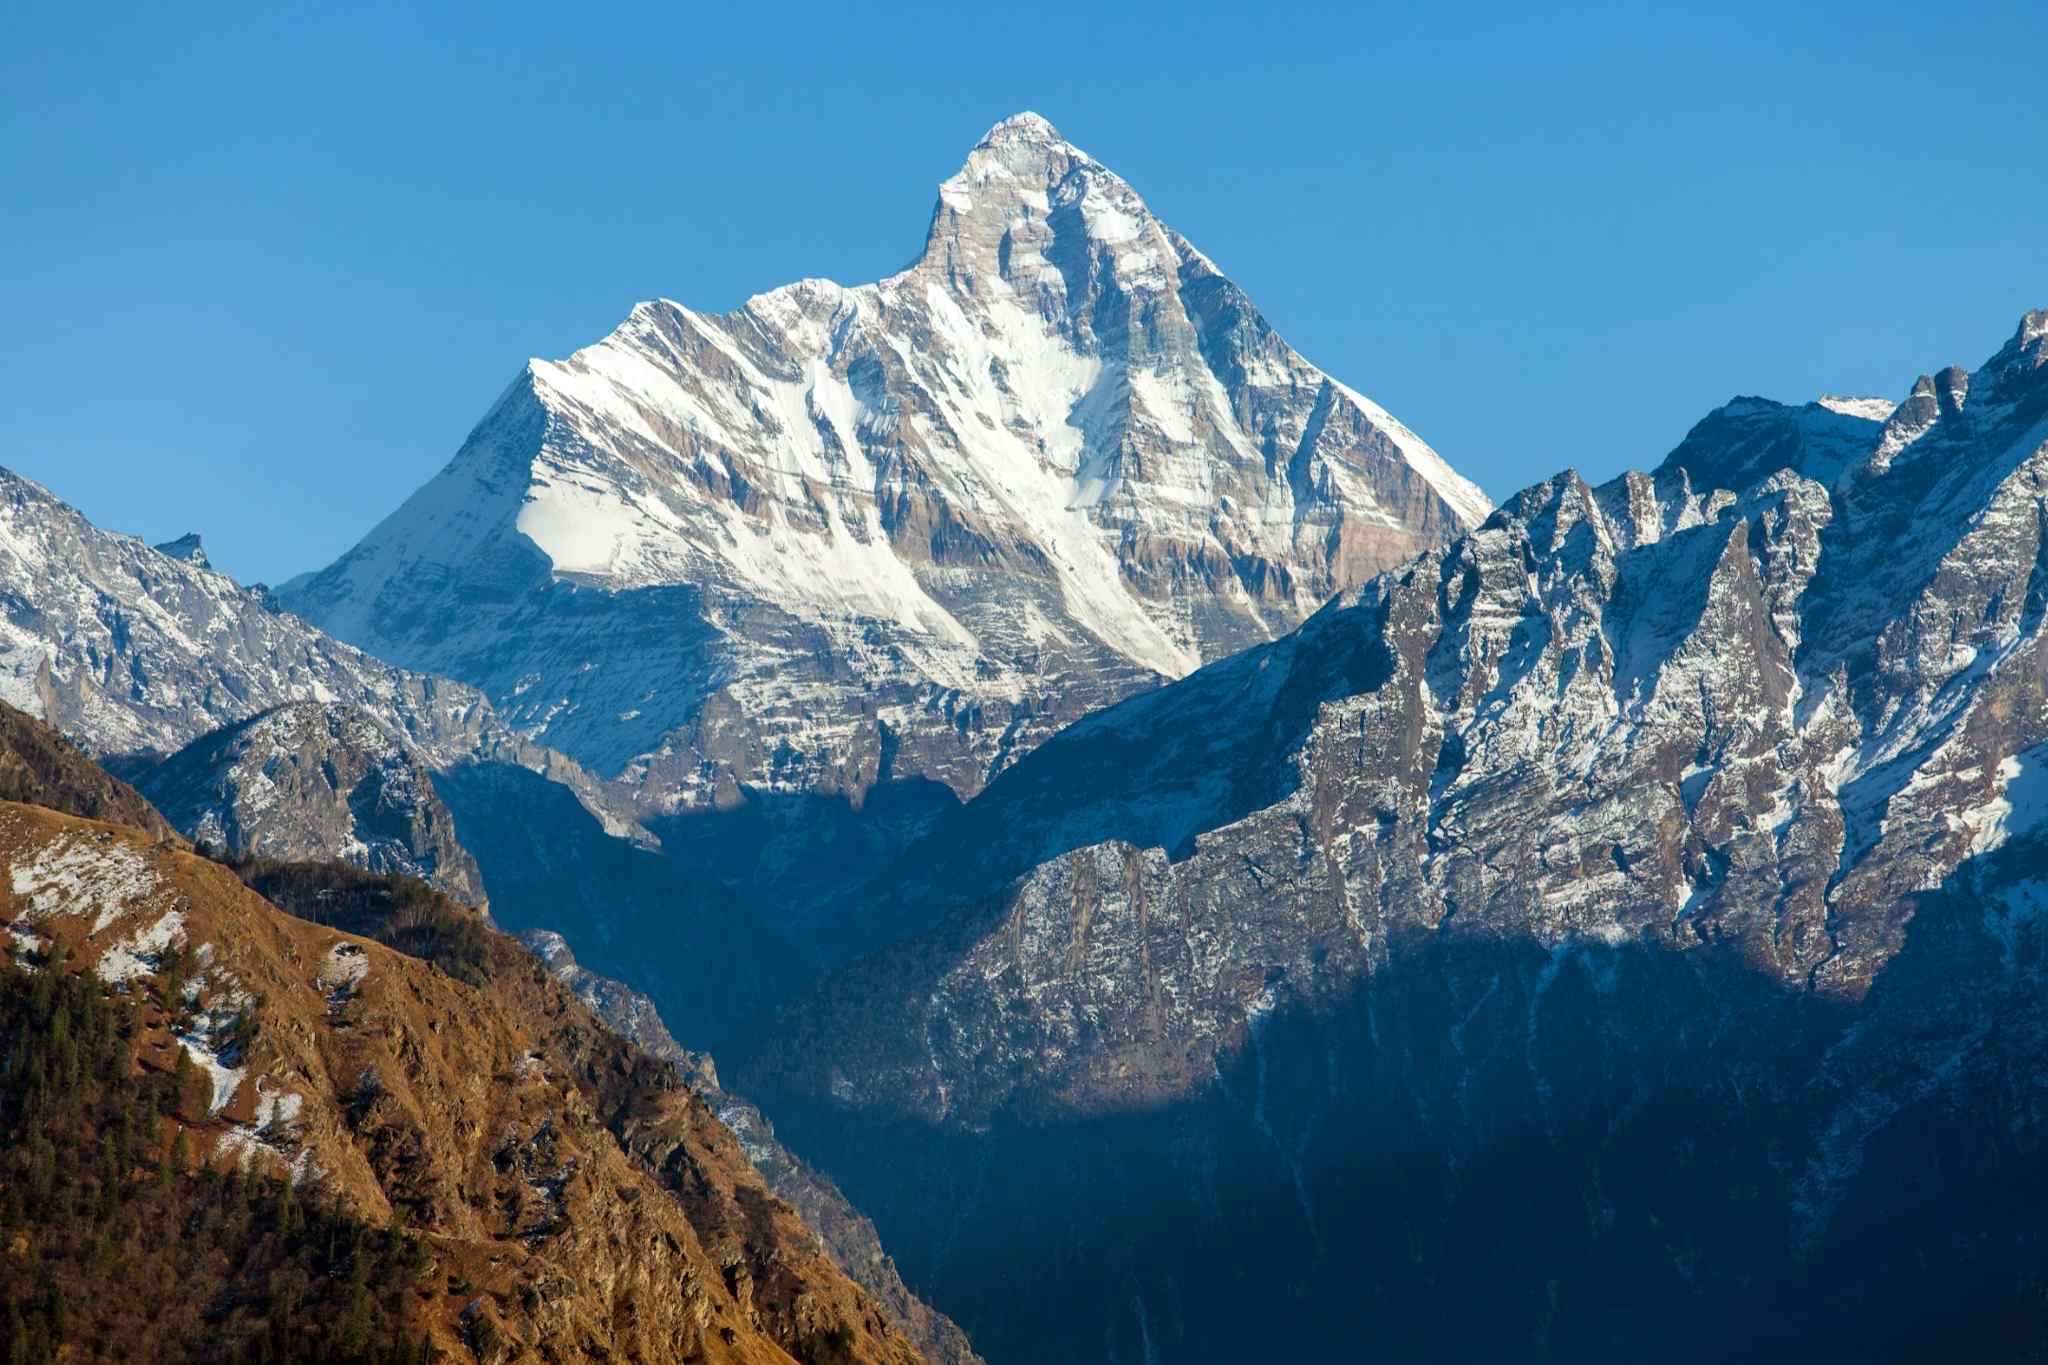 Nanda Devi, Kuari Pass, India - Canva link: https://www.canva.com/photos/MAE2_V8O_fI-mount-nanda-devi-india-himalaya-mountain/